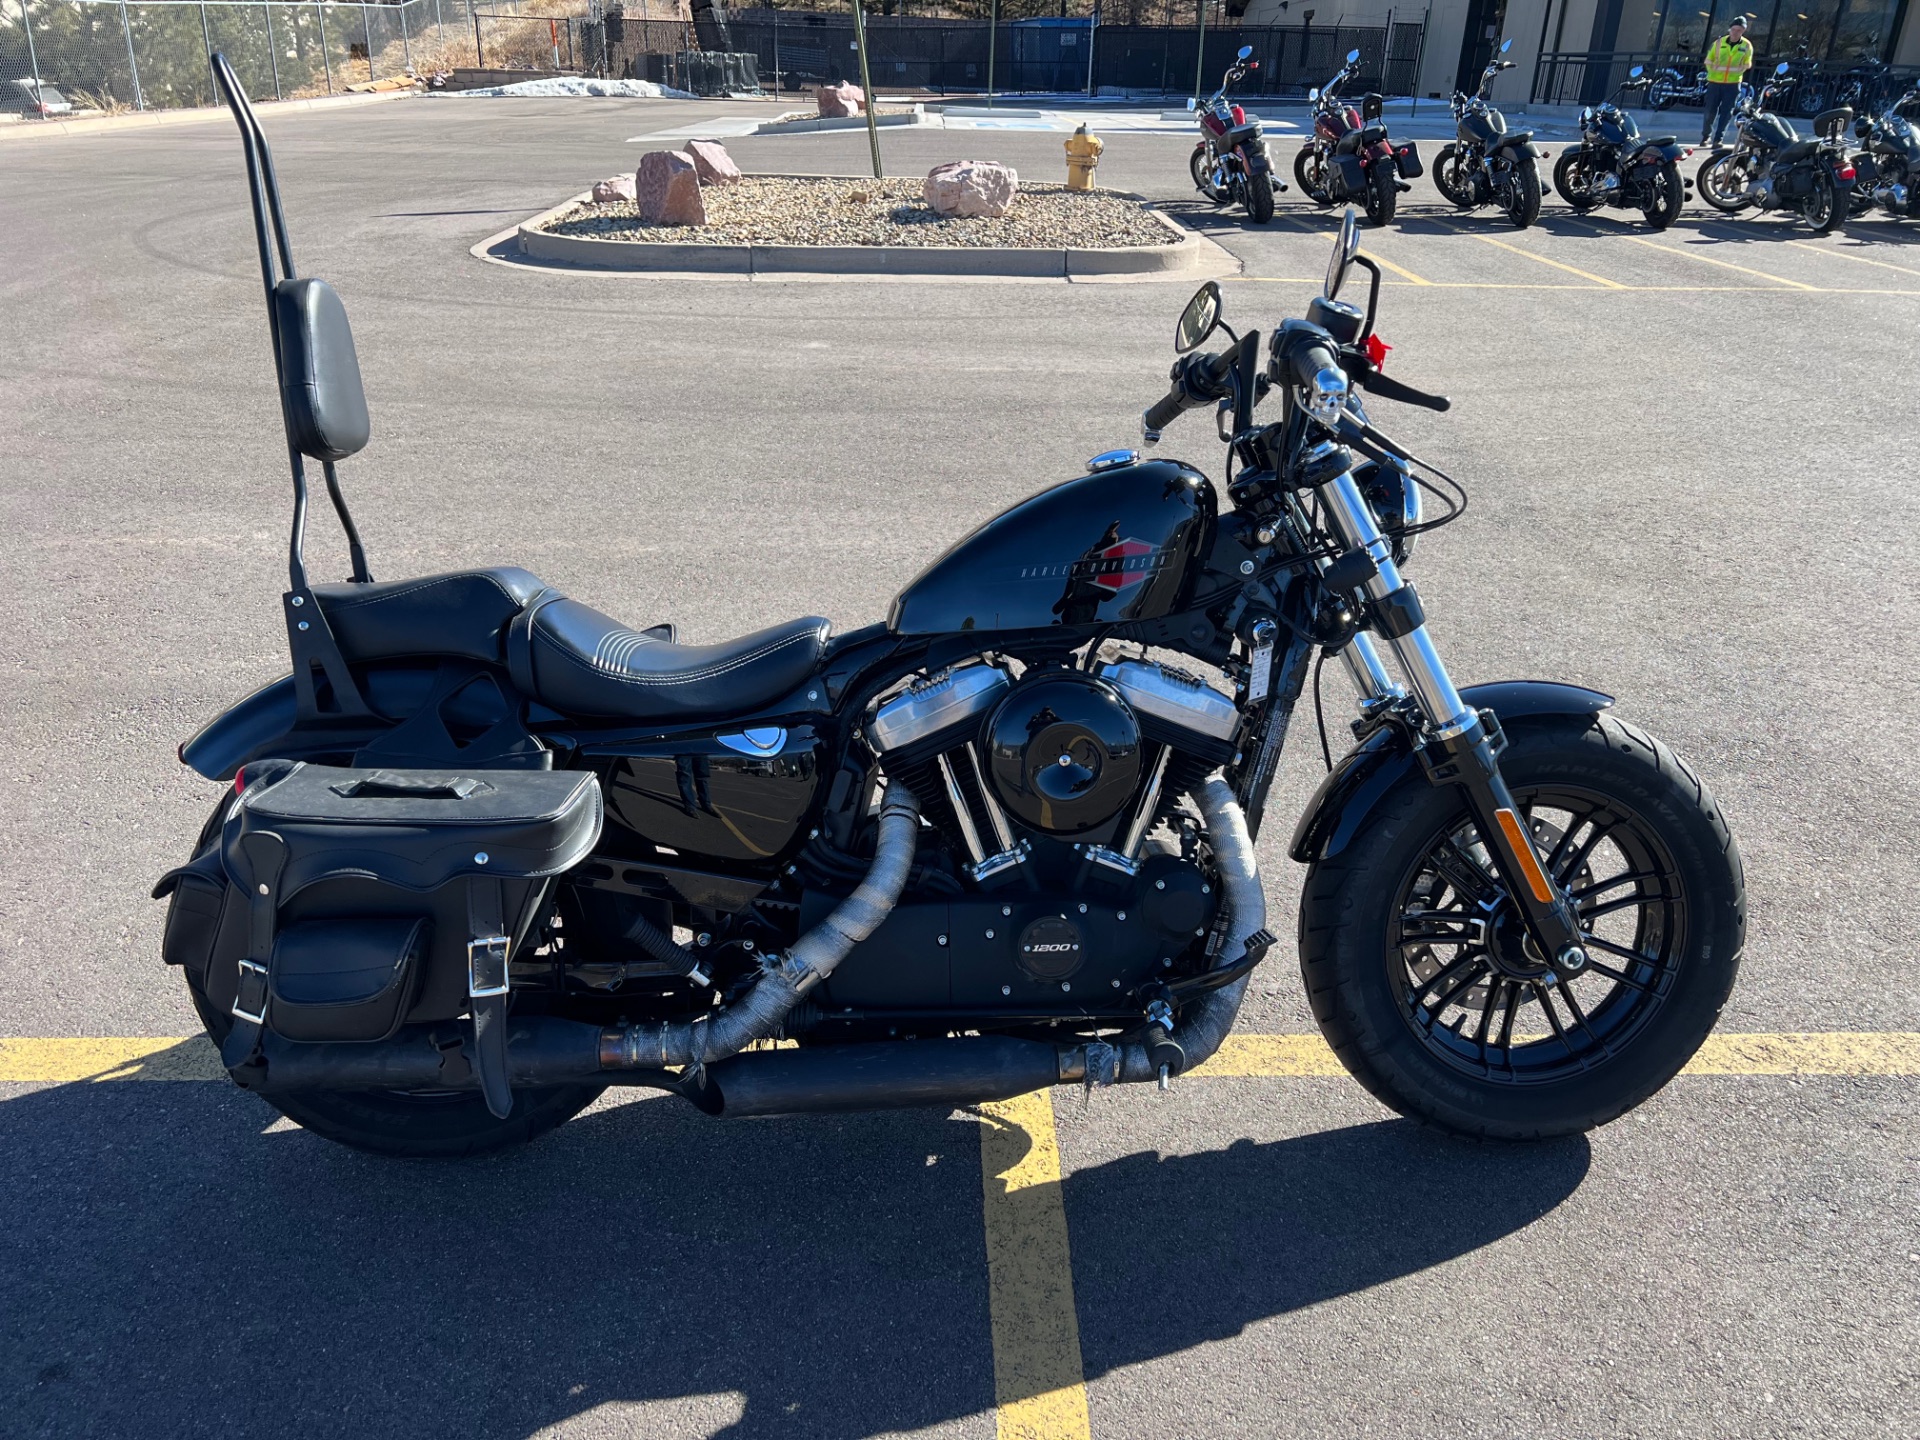 2019 Harley-Davidson Forty-Eight® in Colorado Springs, Colorado - Photo 1